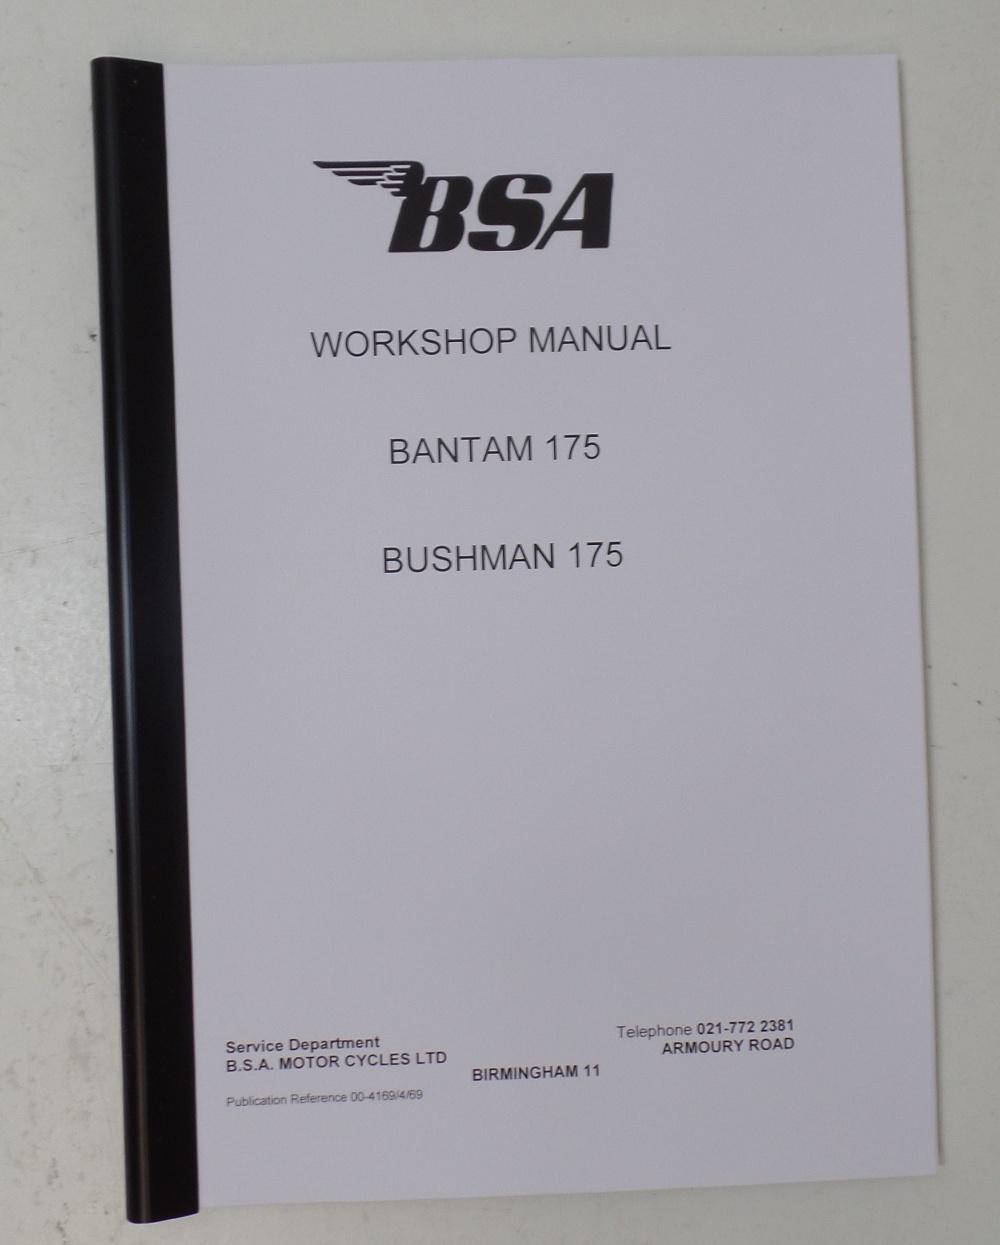 Workshop Manual GS07424 BSA Bantam & Bushman B175 Models 1969 onwards.